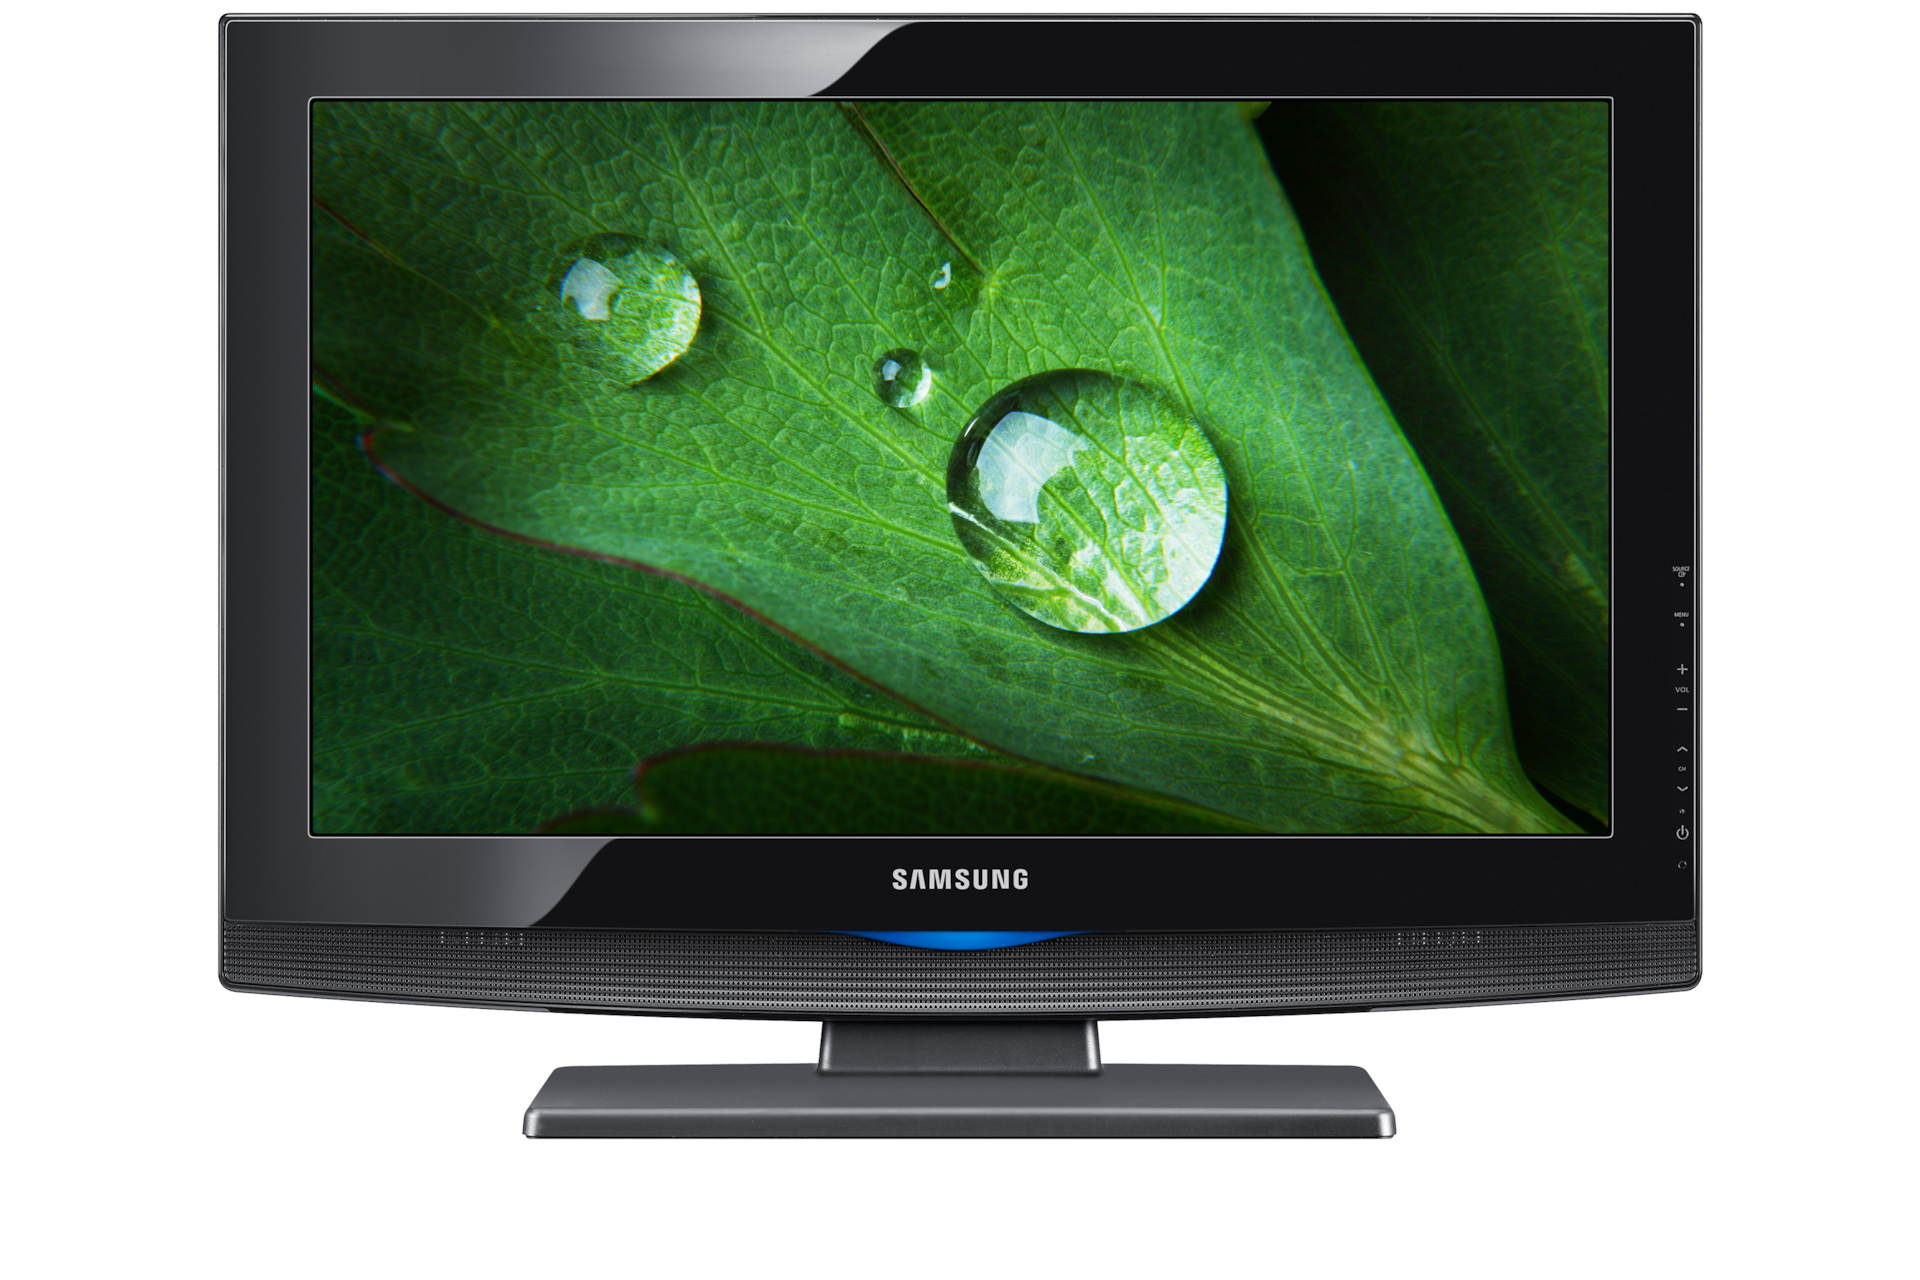 Televisor Samsung 21 pulgadas - ade93 - ID 483200